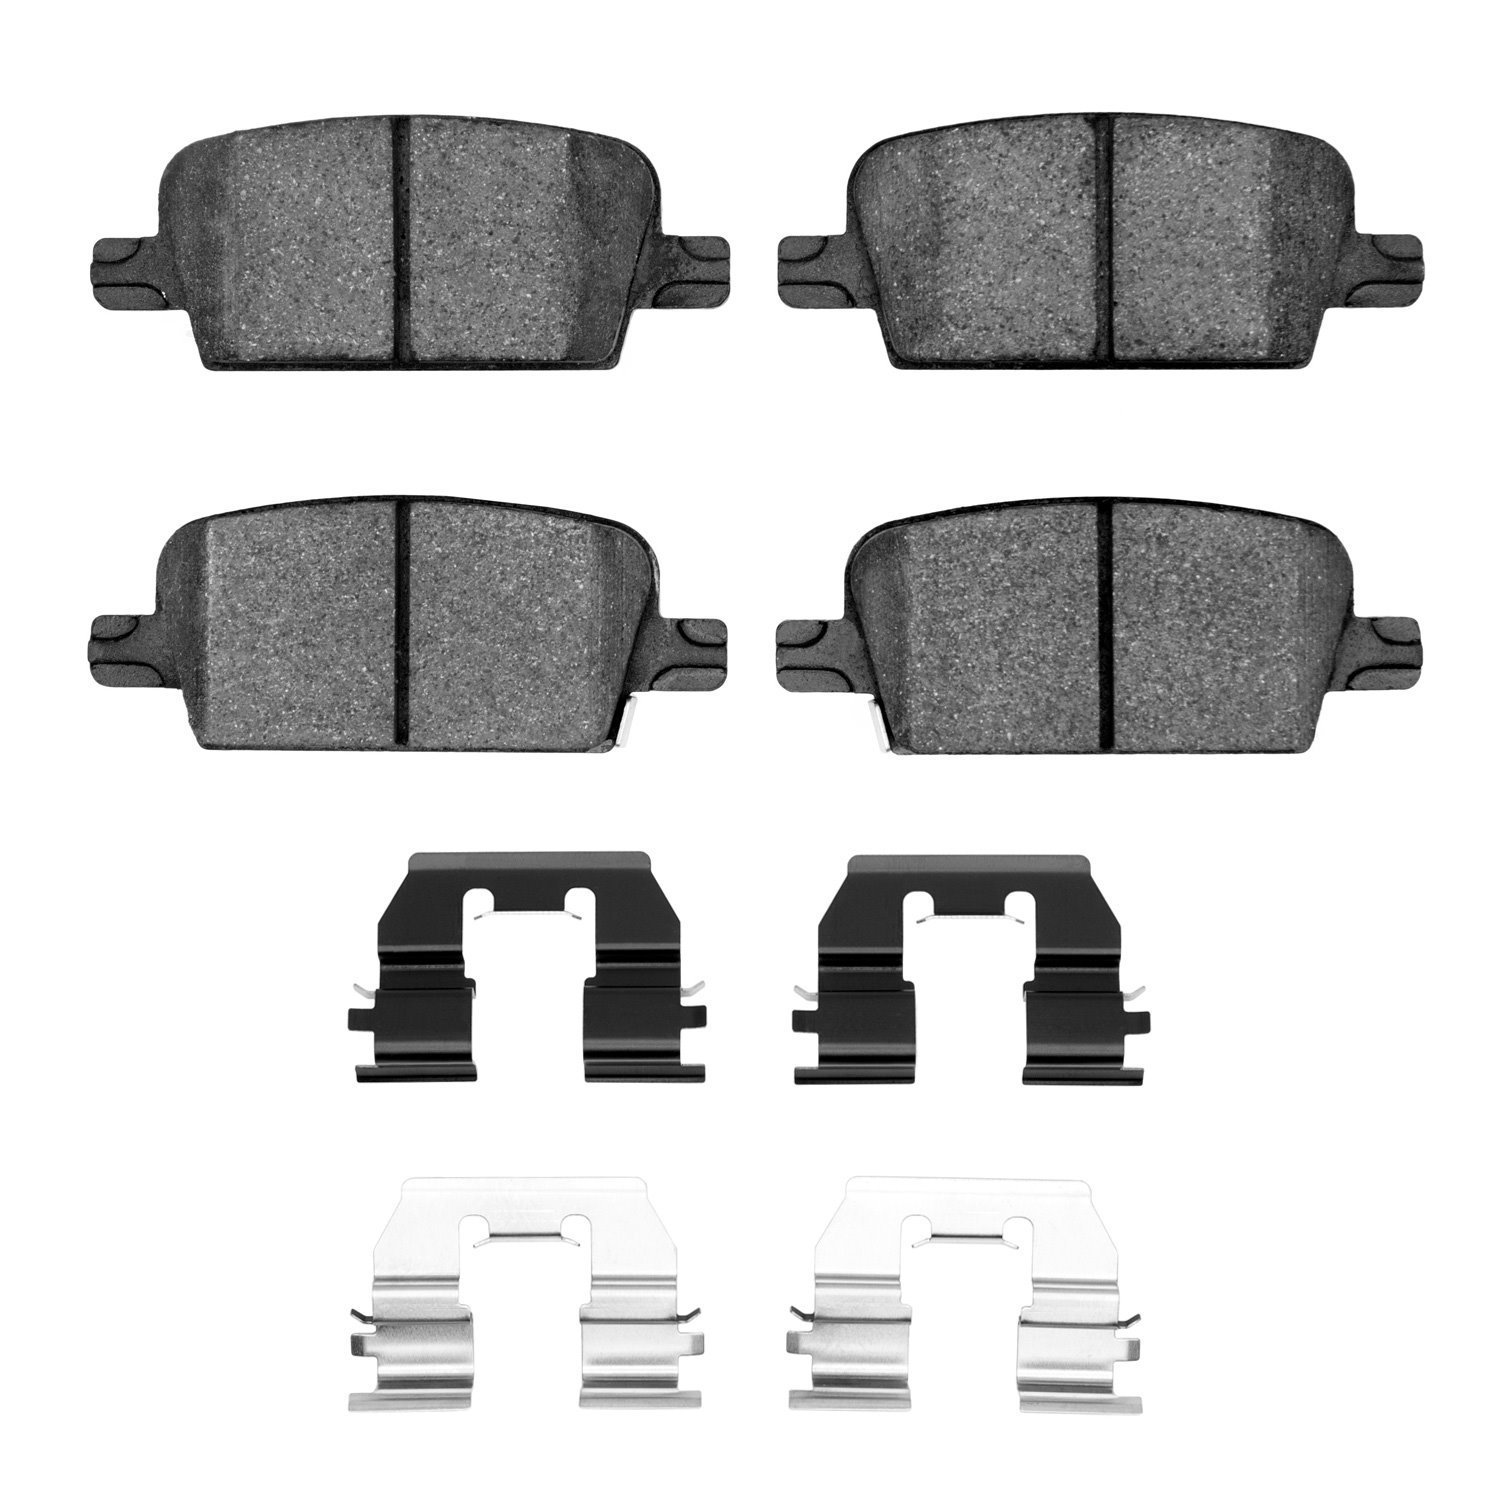 1310-1921-01 3000-Series Ceramic Brake Pads & Hardware Kit, Fits Select GM, Position: Rear